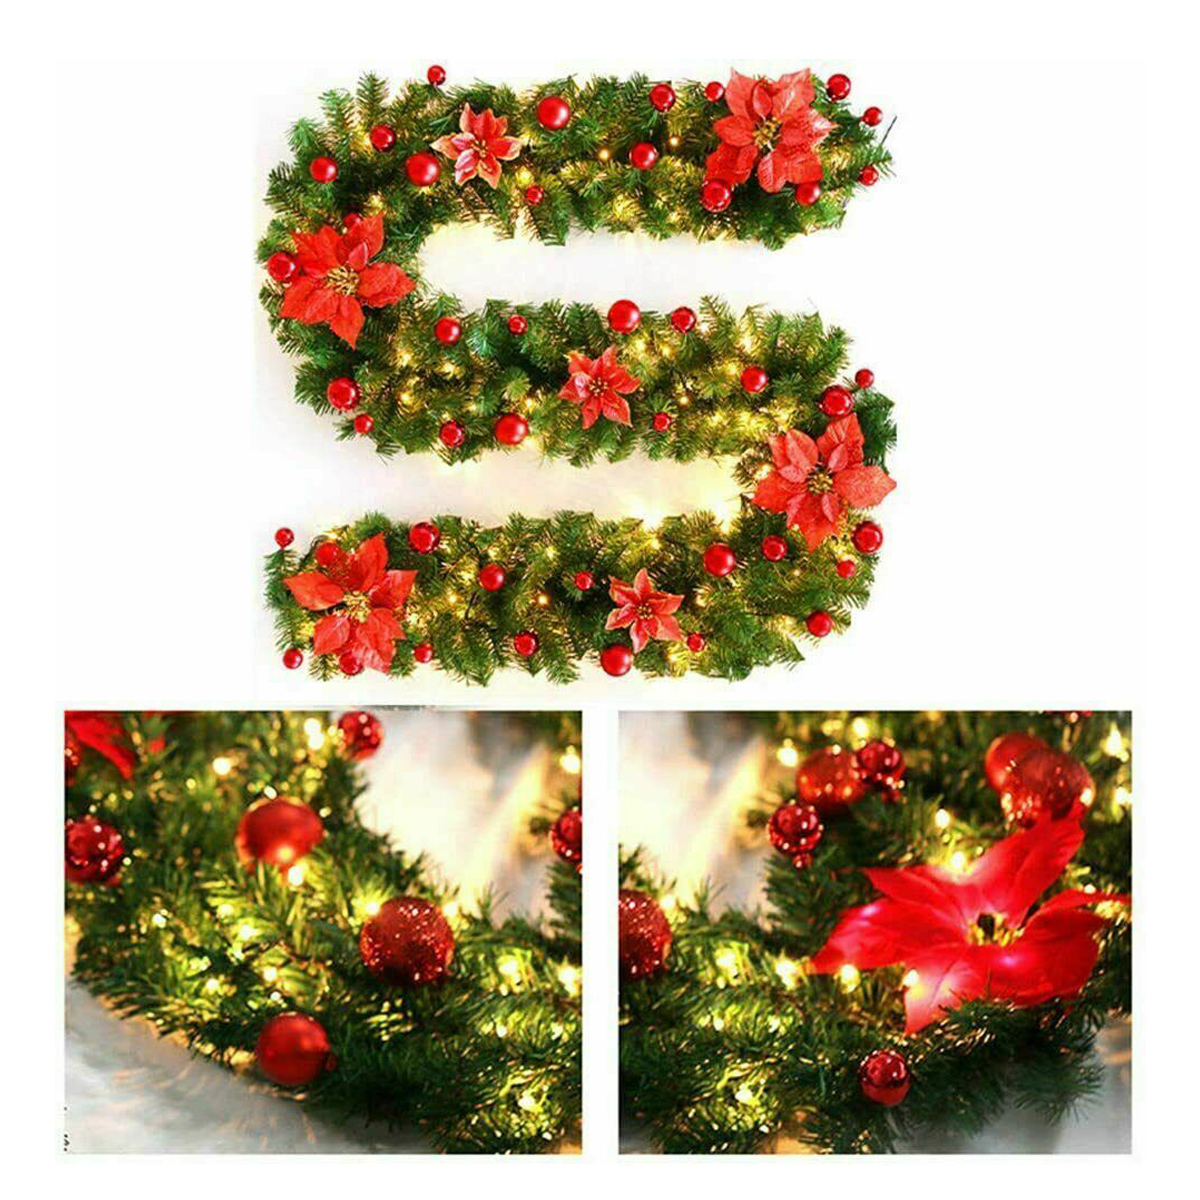 27m-Christmas-Tree-Wreath-Door-Hanging-Garland-Window-Ornament-Xmas-Party-Decor-Christmas-Decoration-1771839-9